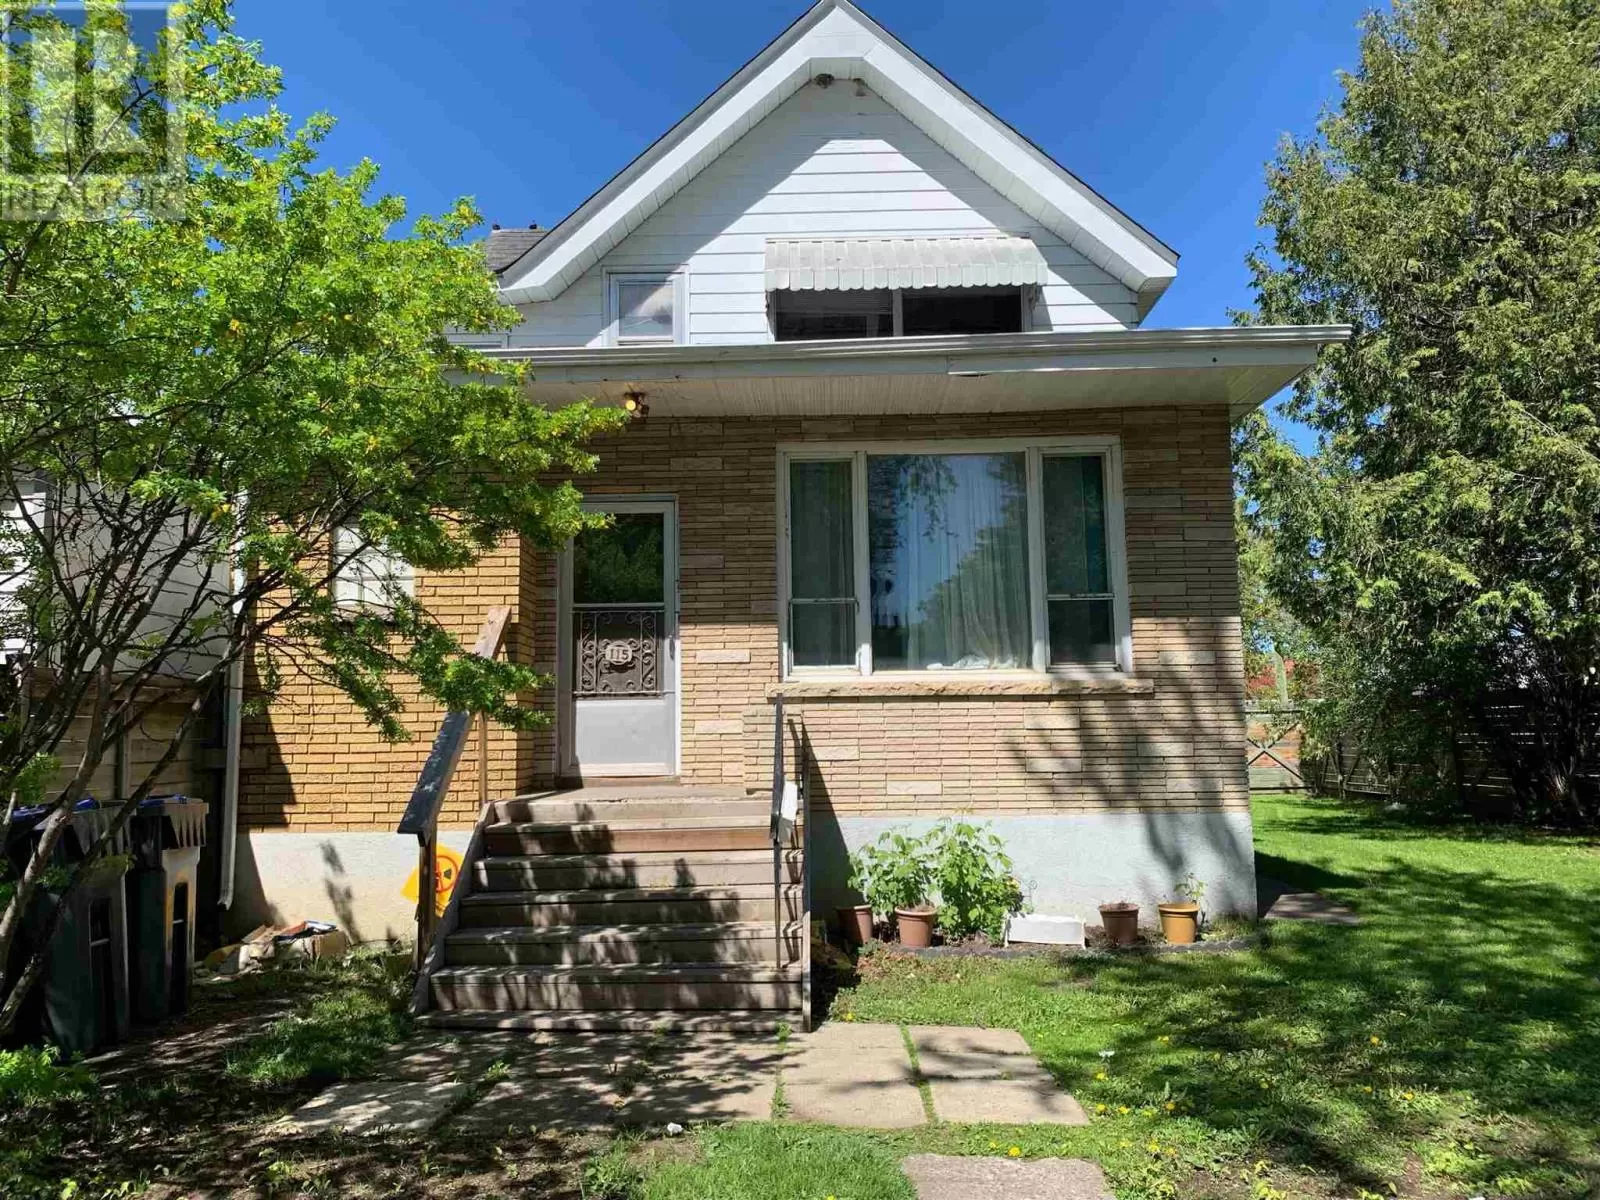 Multi-Family for rent: 115 Cameron St, THUNDER BAY, Ontario P7C 2G7